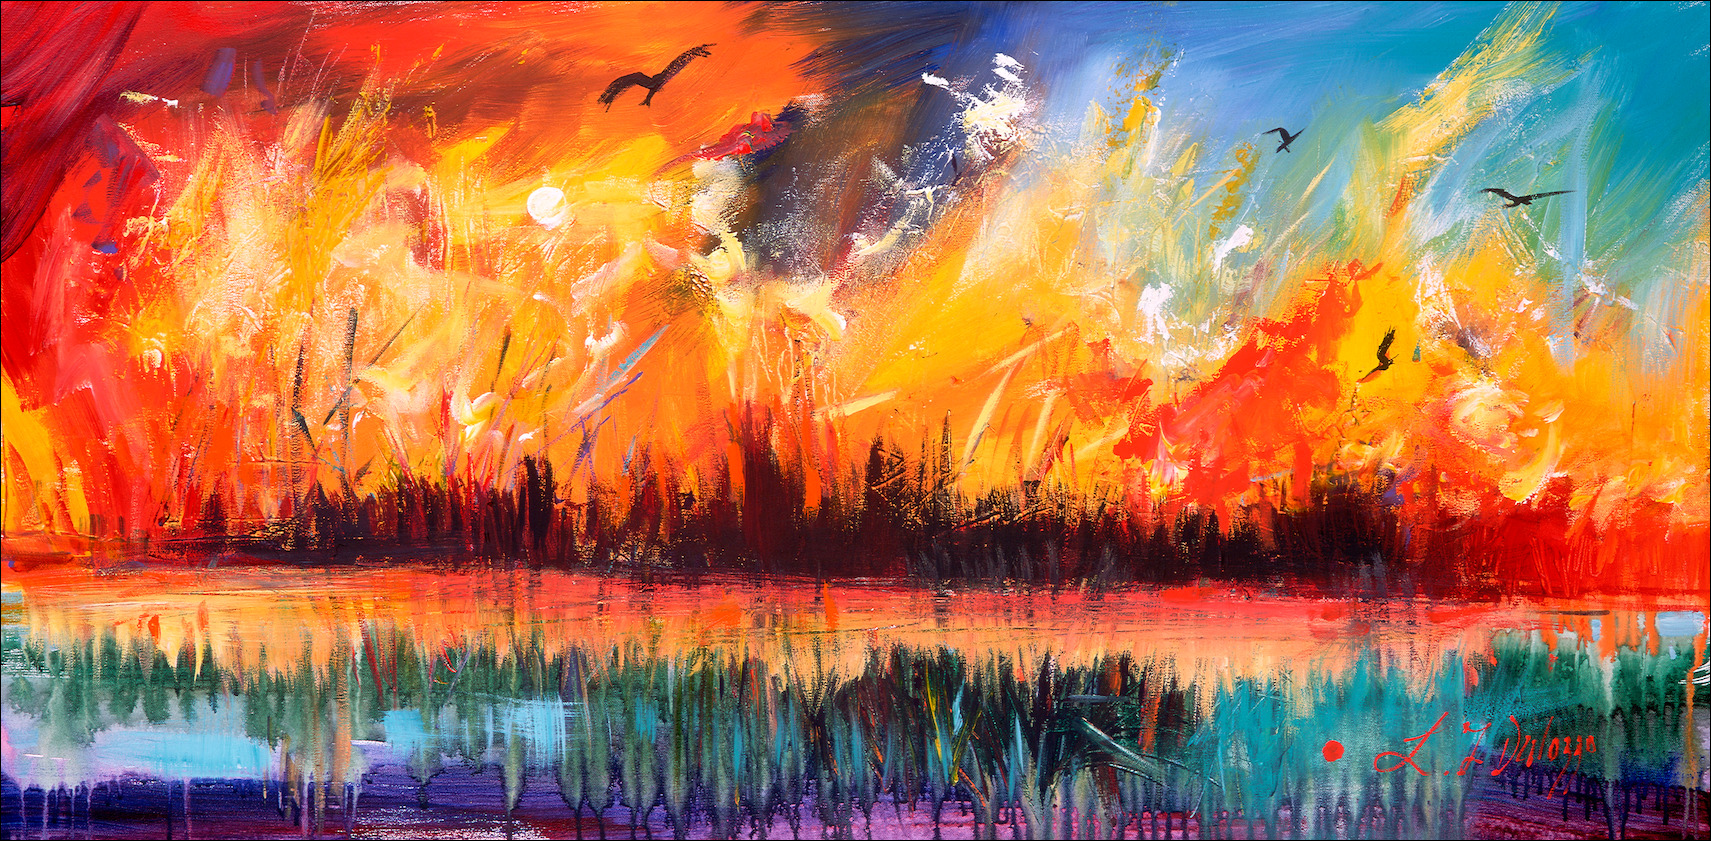 Sugarcane Burning Landscape Canvas Print "Sugar Cane Burning" by L&J Dalozzo